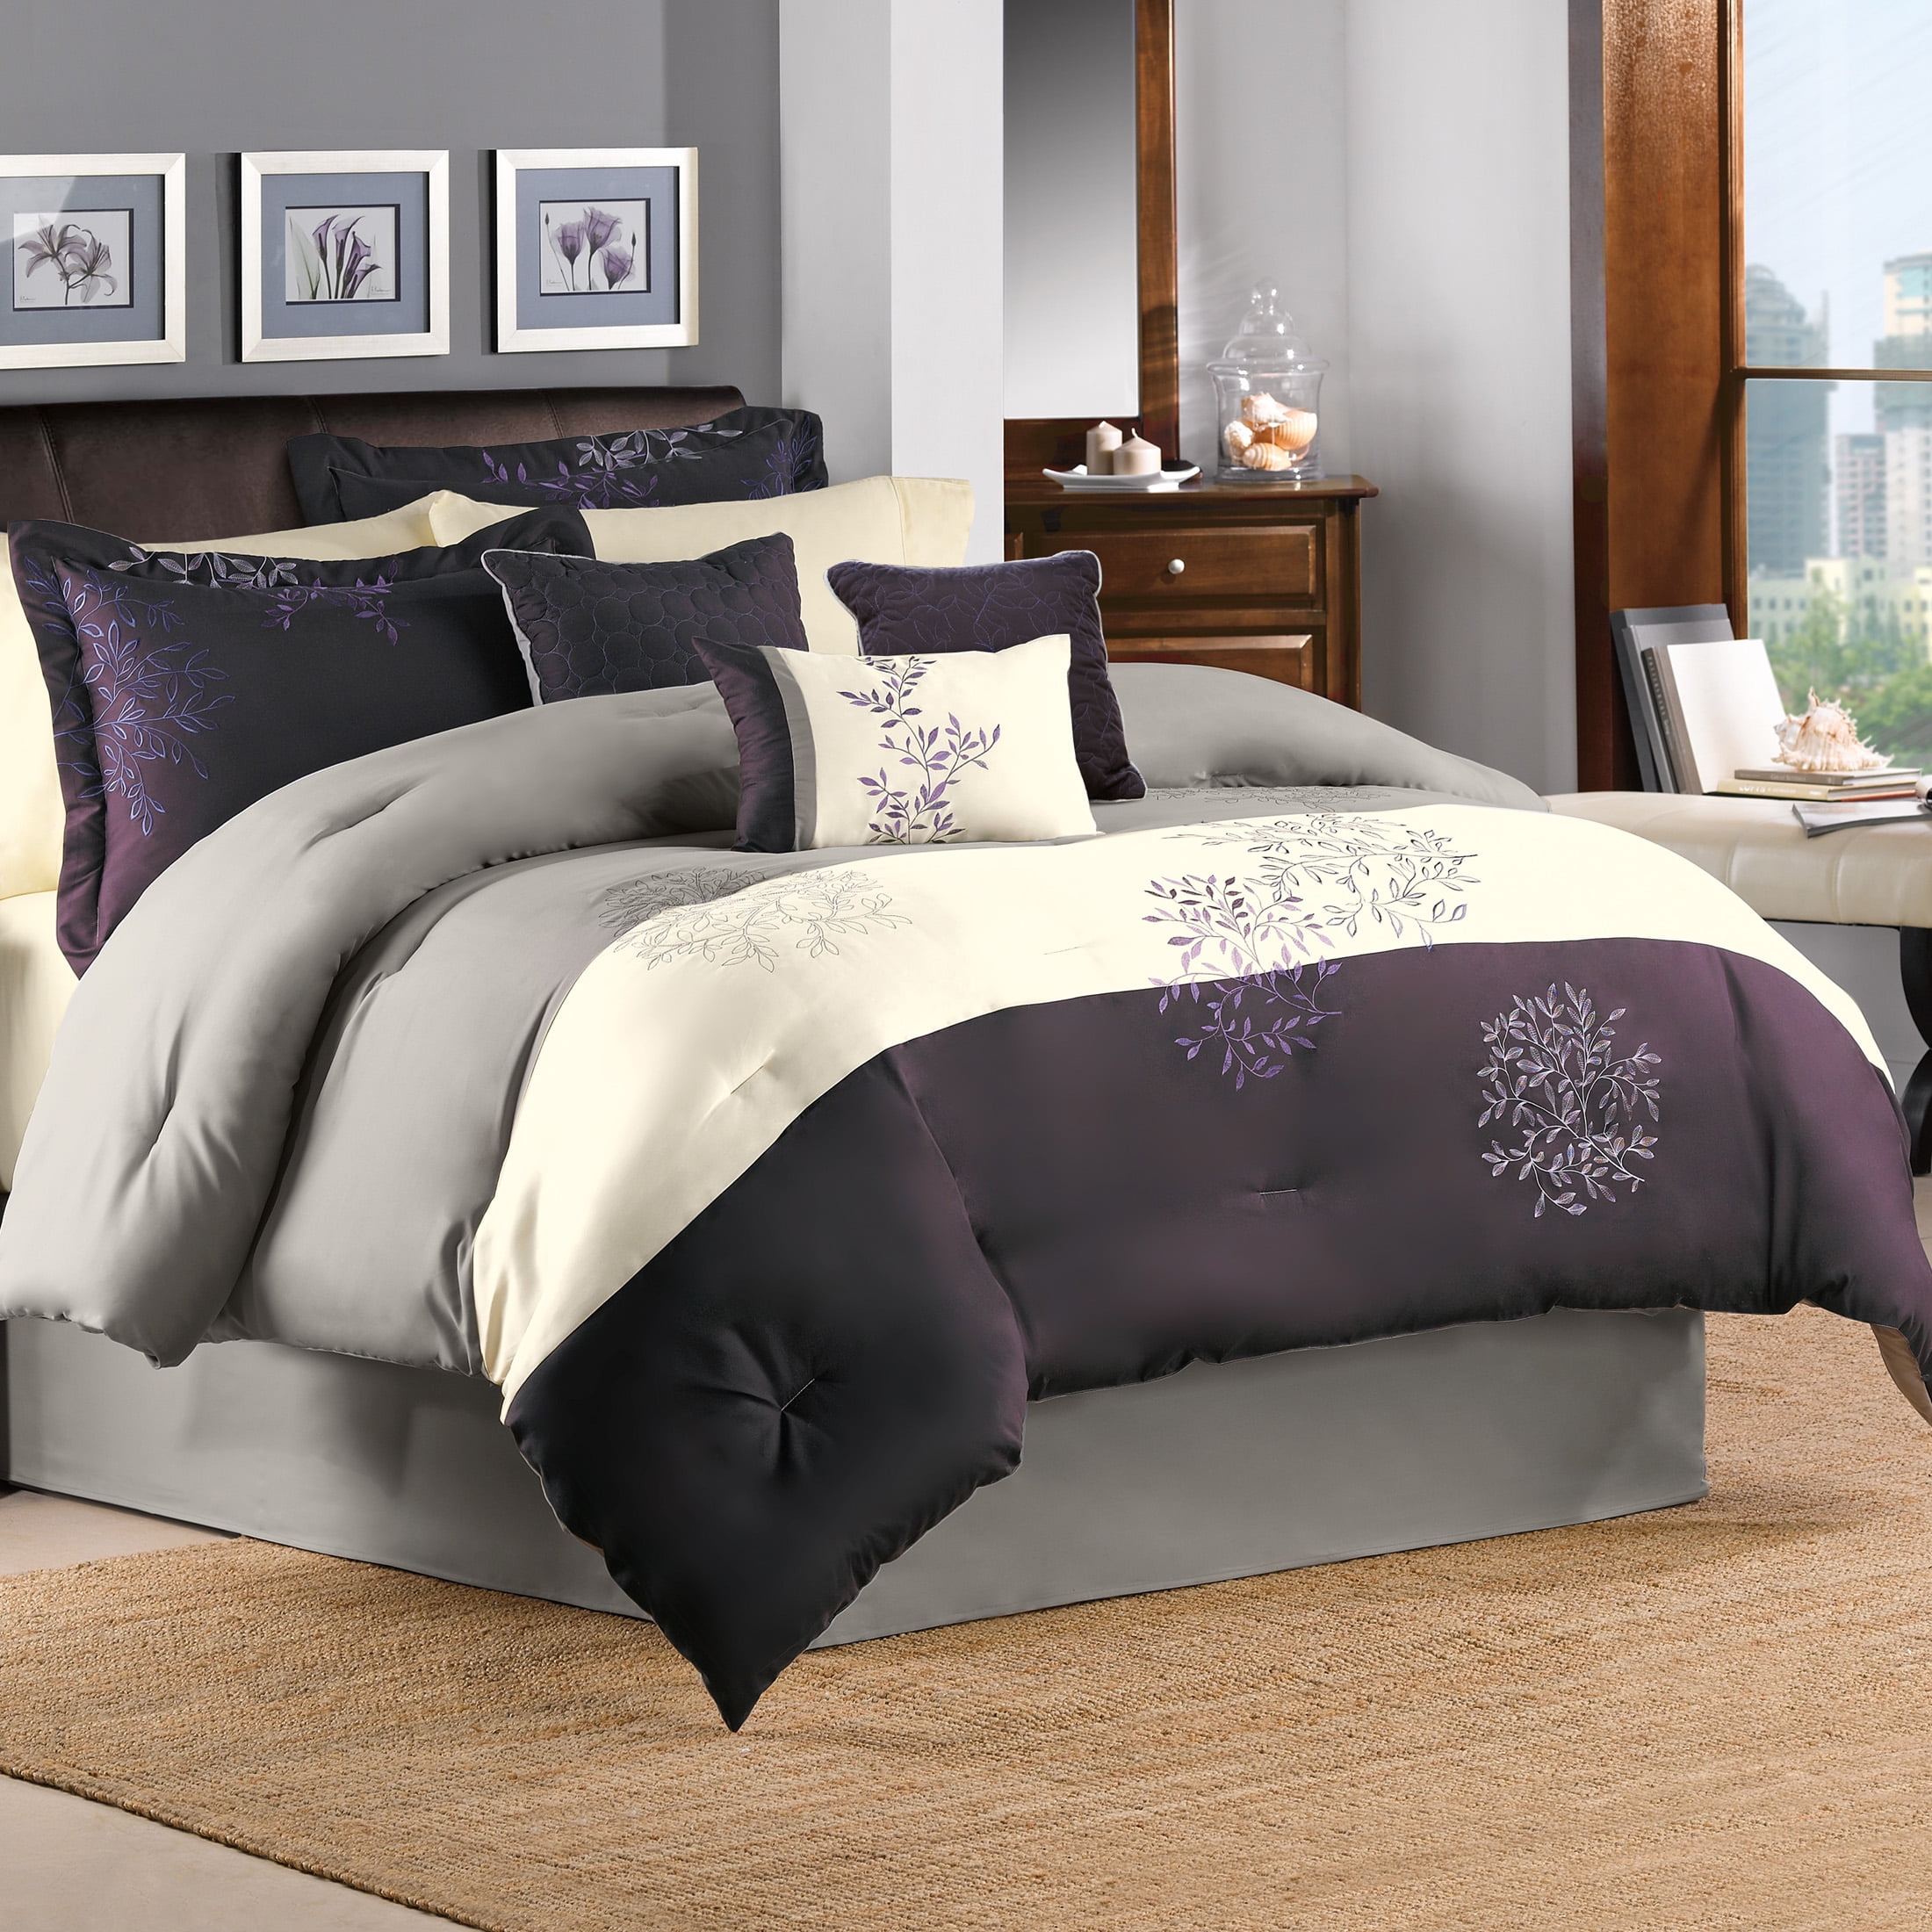 Details about   Down LUXURY Reversible Alternative Comforter Set Multiple Colors/Sizes Bedding 